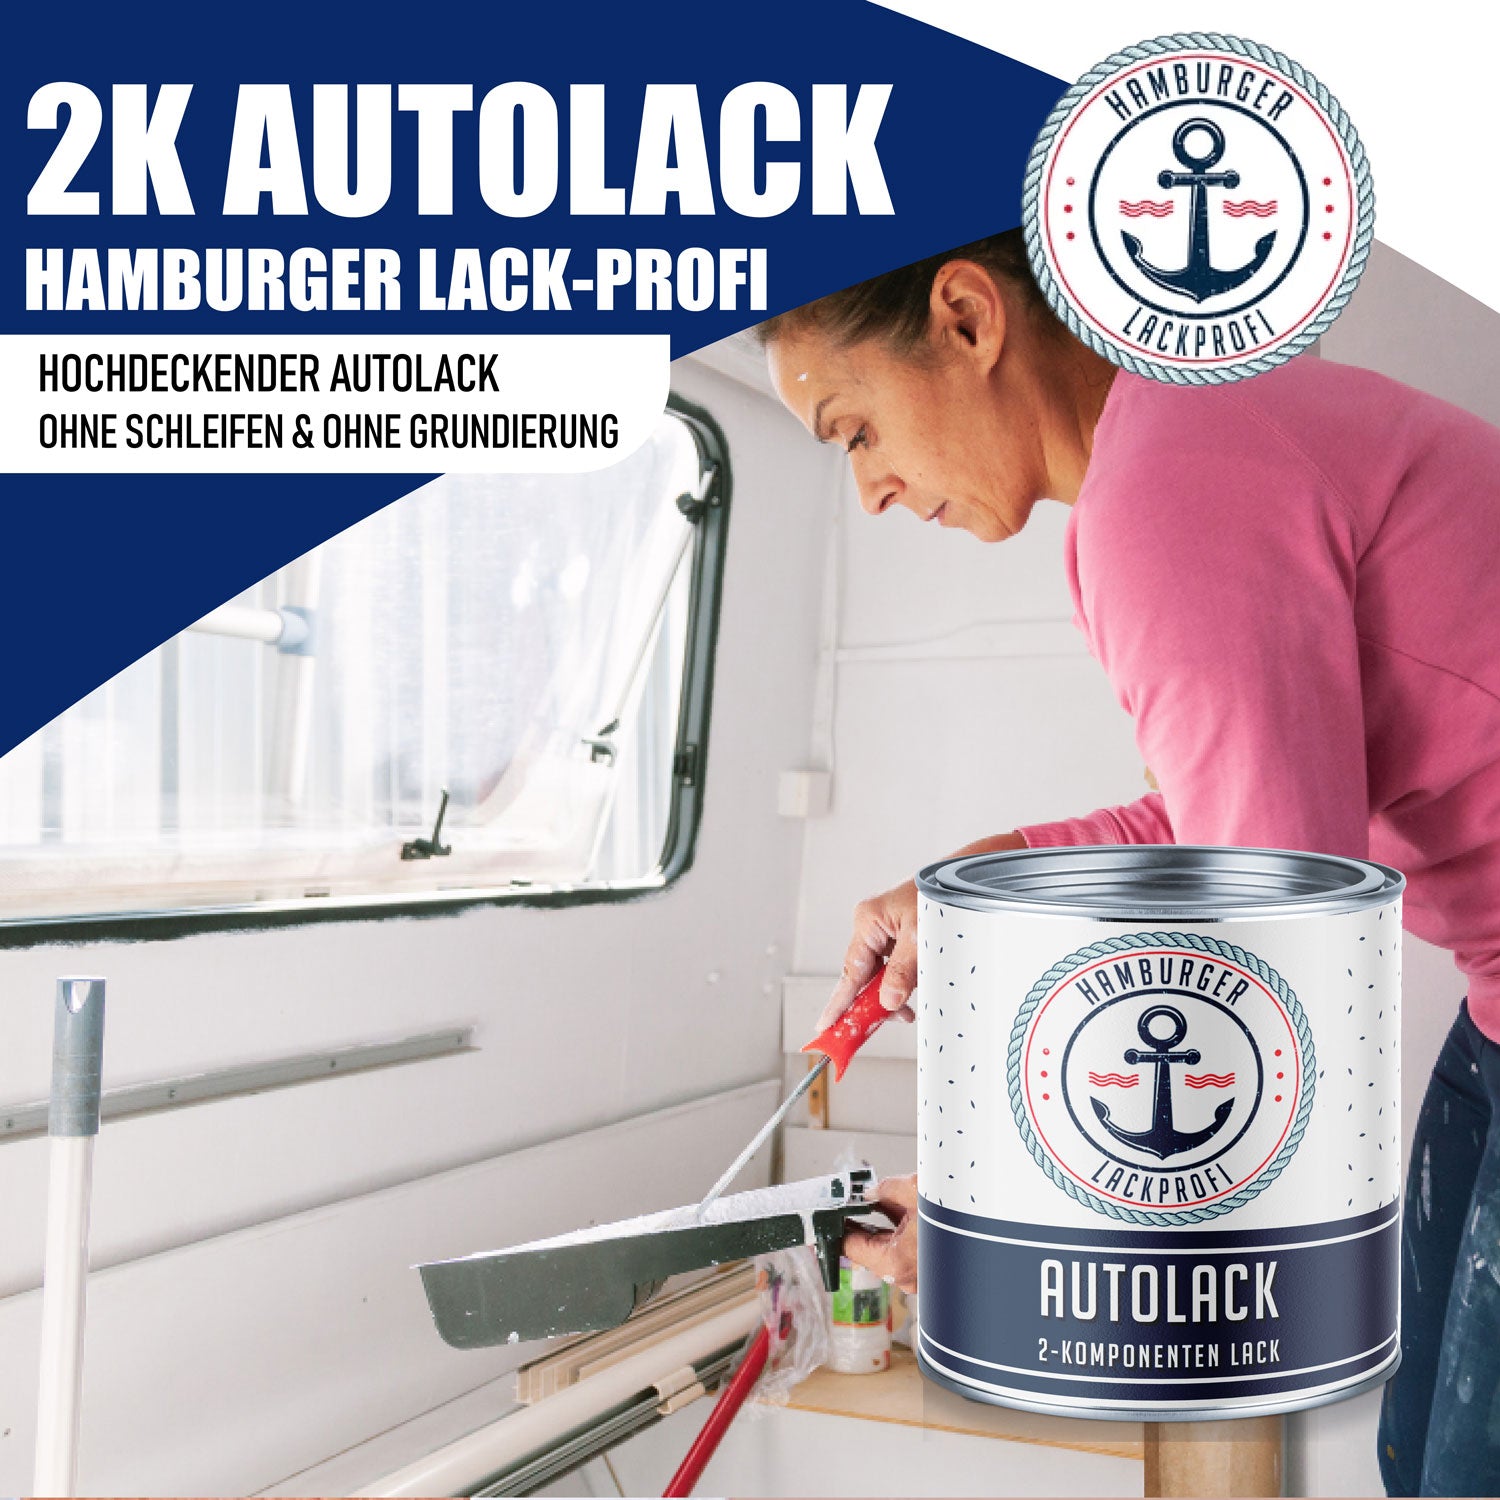 Hamburger Lack-Profi 2K Autolack in Patinagrün RAL 6000 mit Lackierset (X300) & Verdünnung (1 L) - 30% Sparangebot